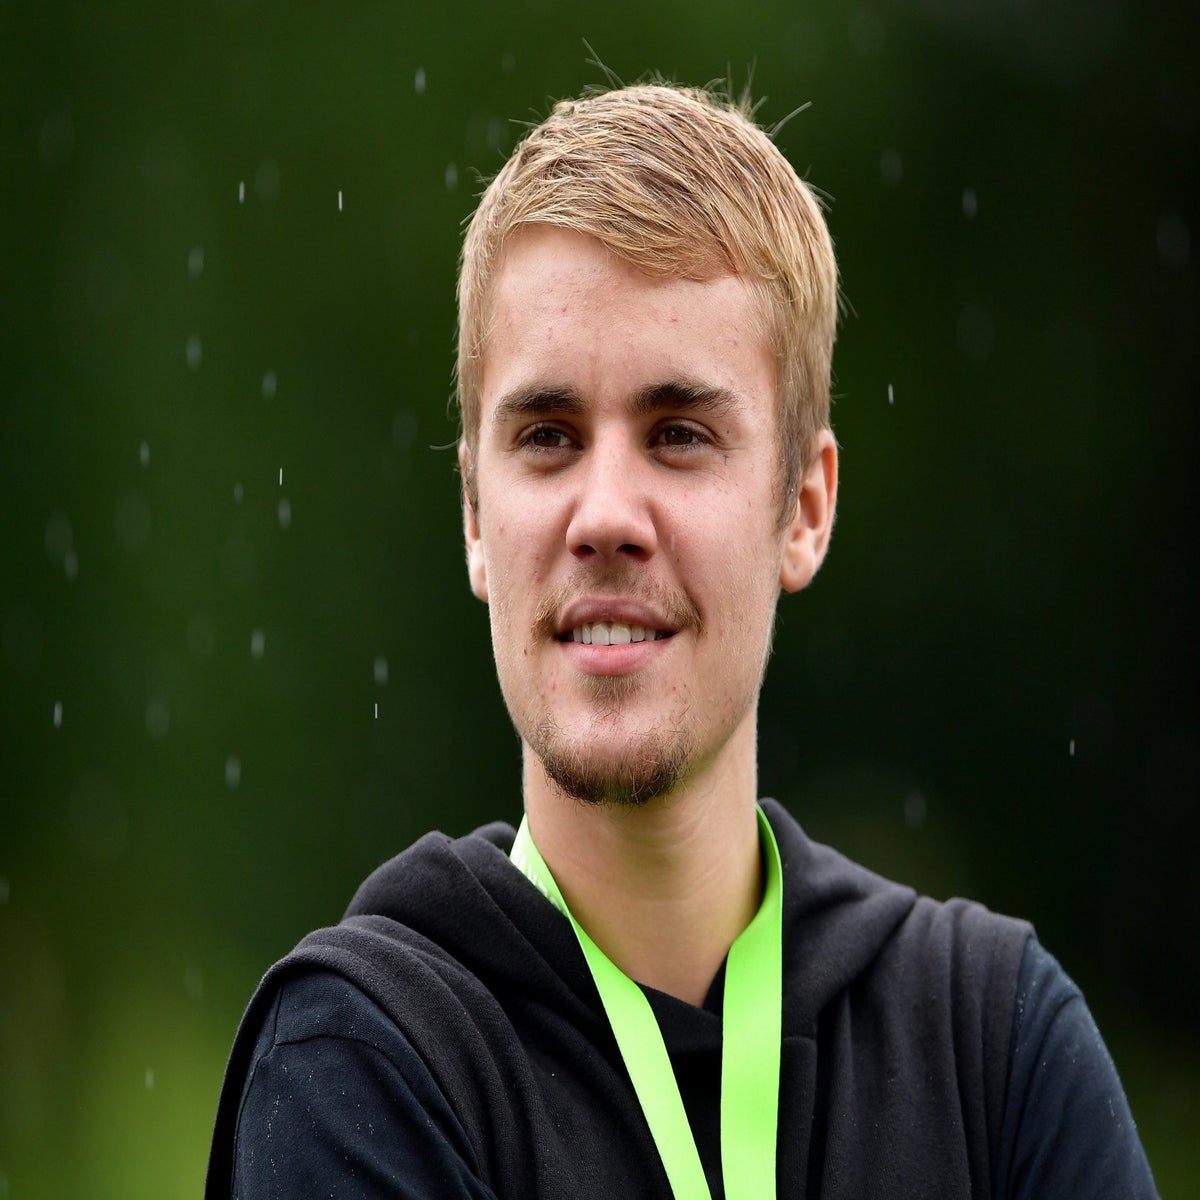 Justin Bieber's odd behaviour once again overshadows his music